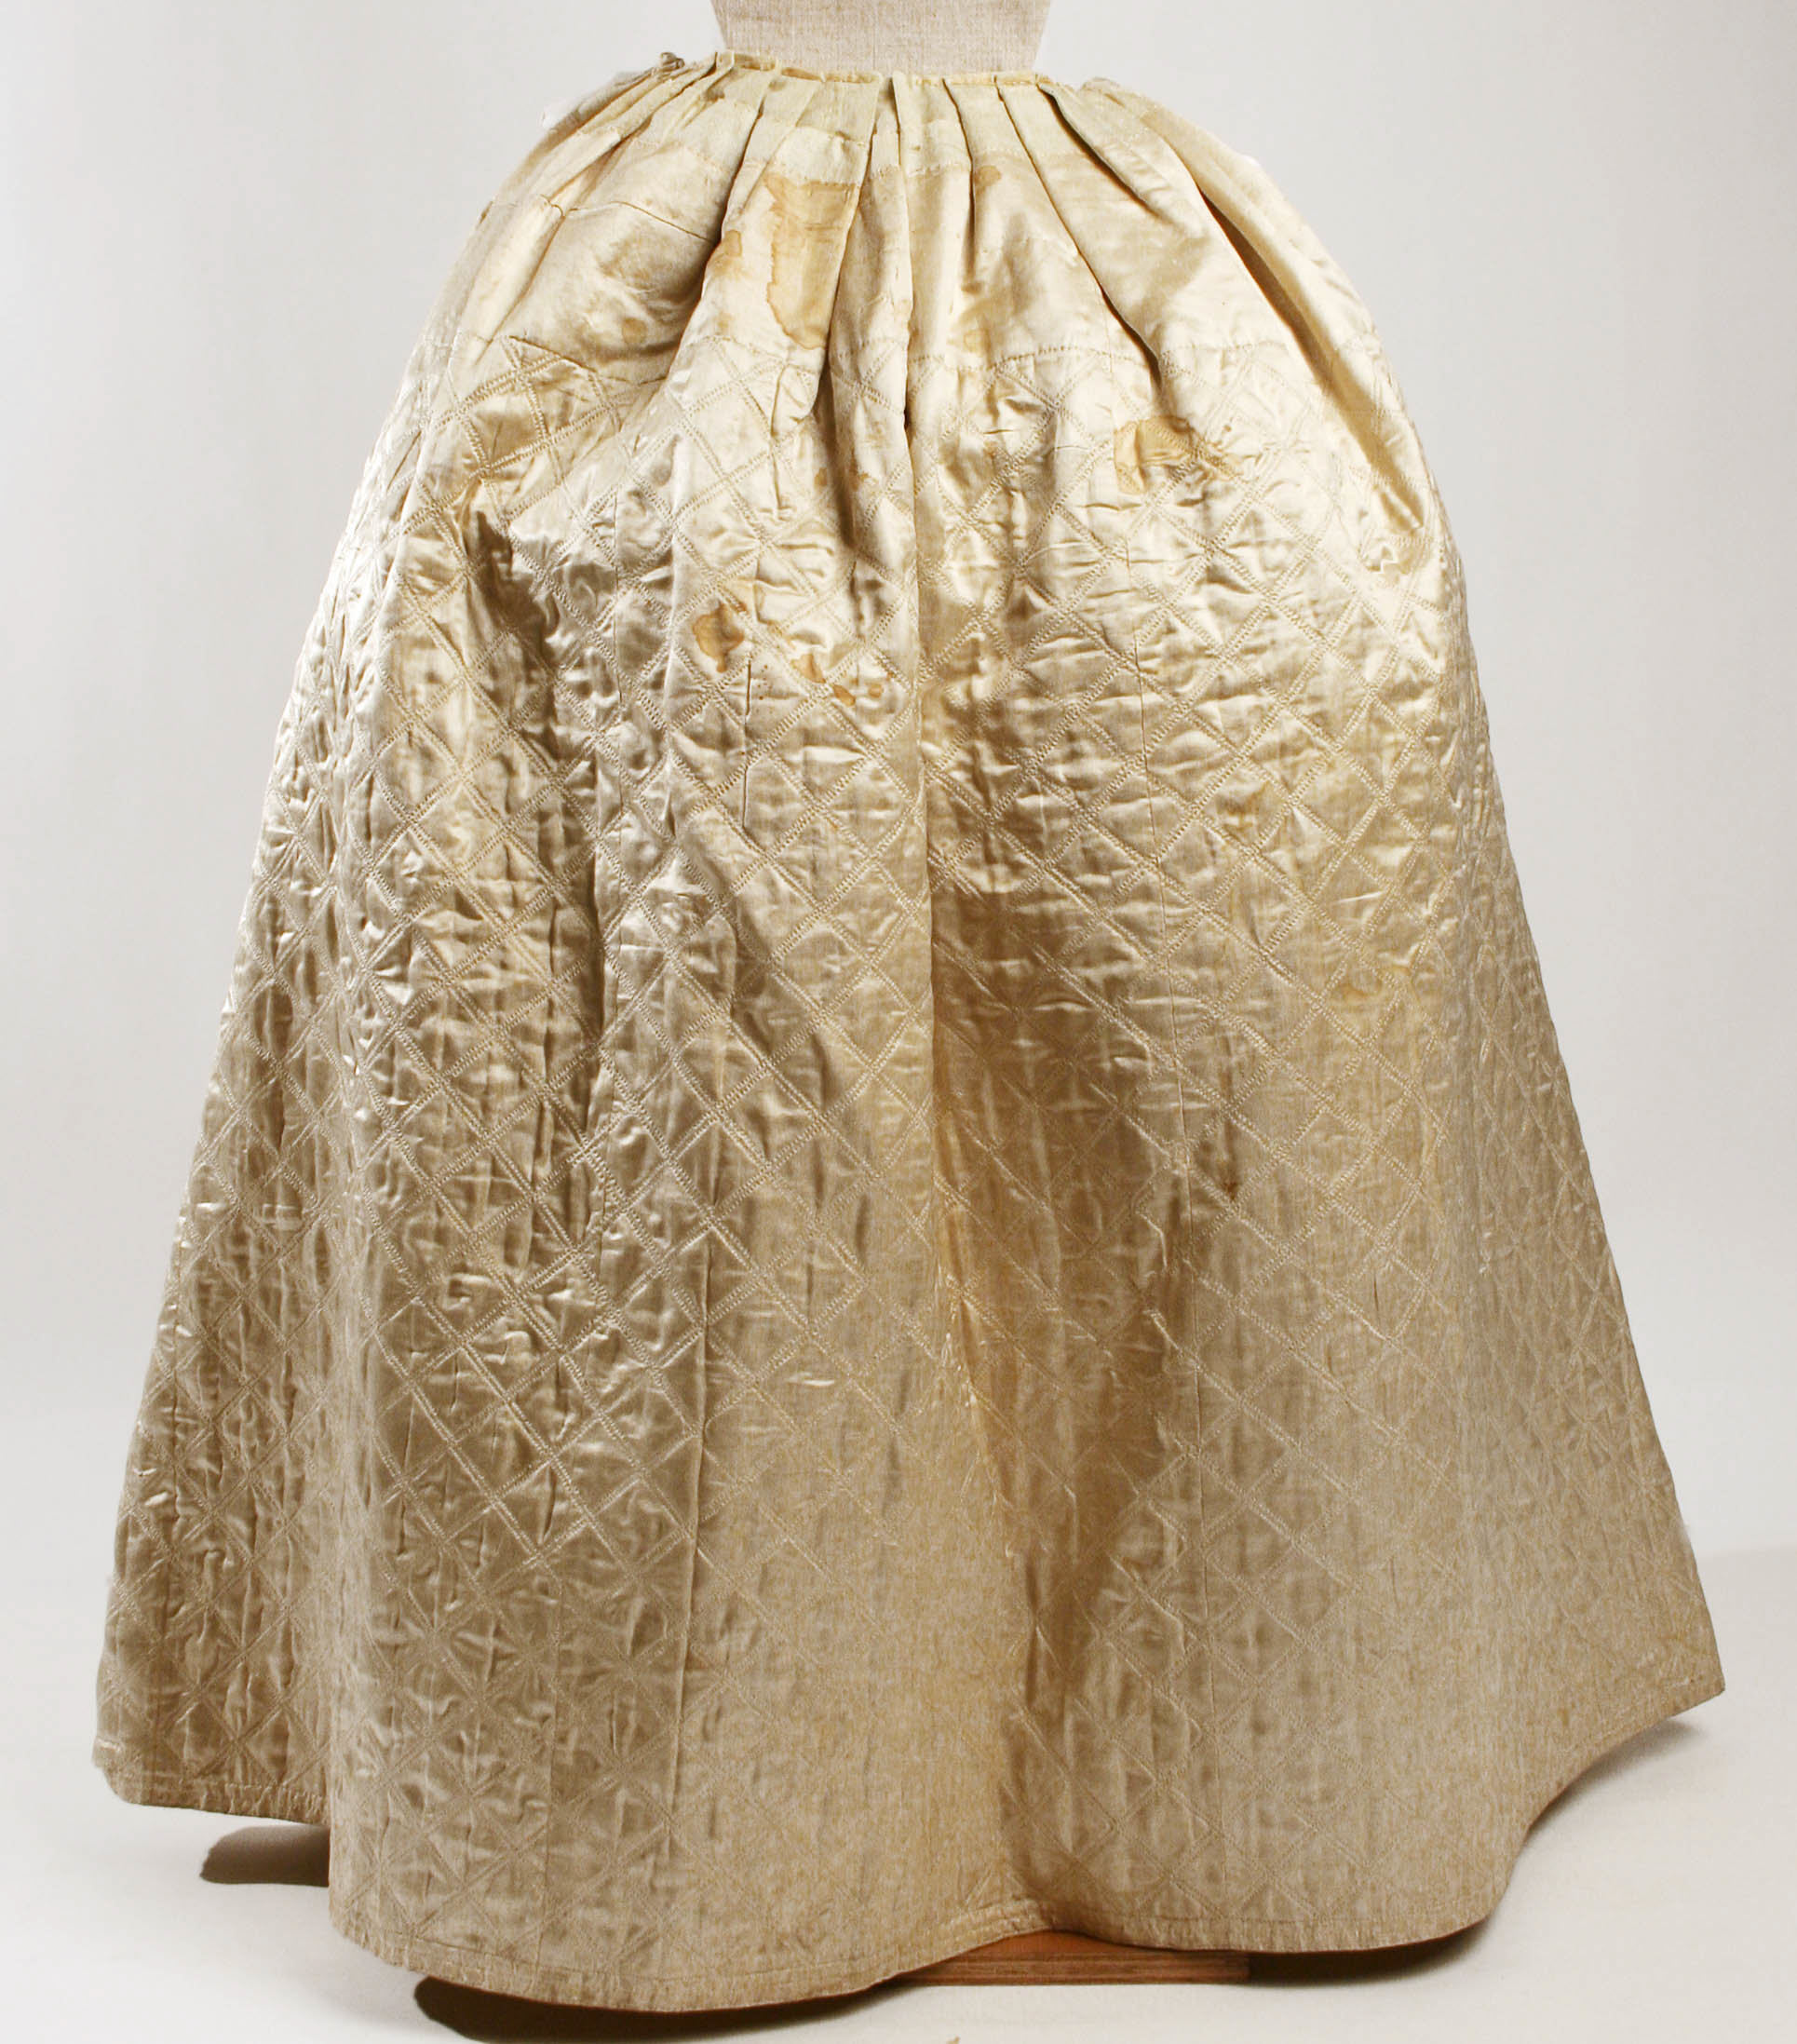 Quilted petticoat